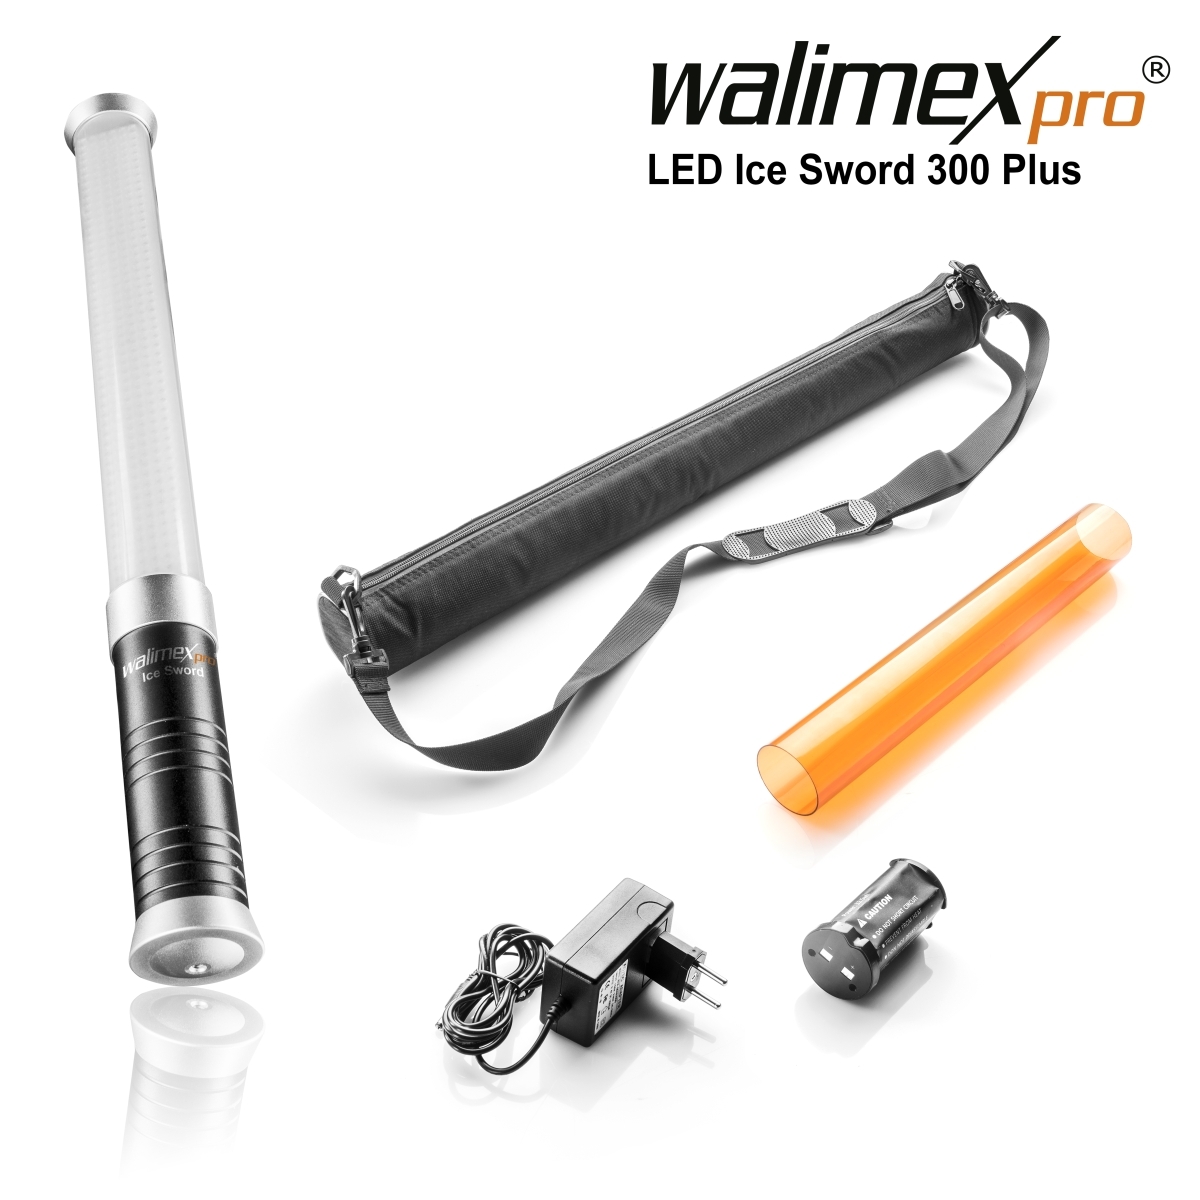 Walimex pro LED Ice Sword 300 Plus 20 W